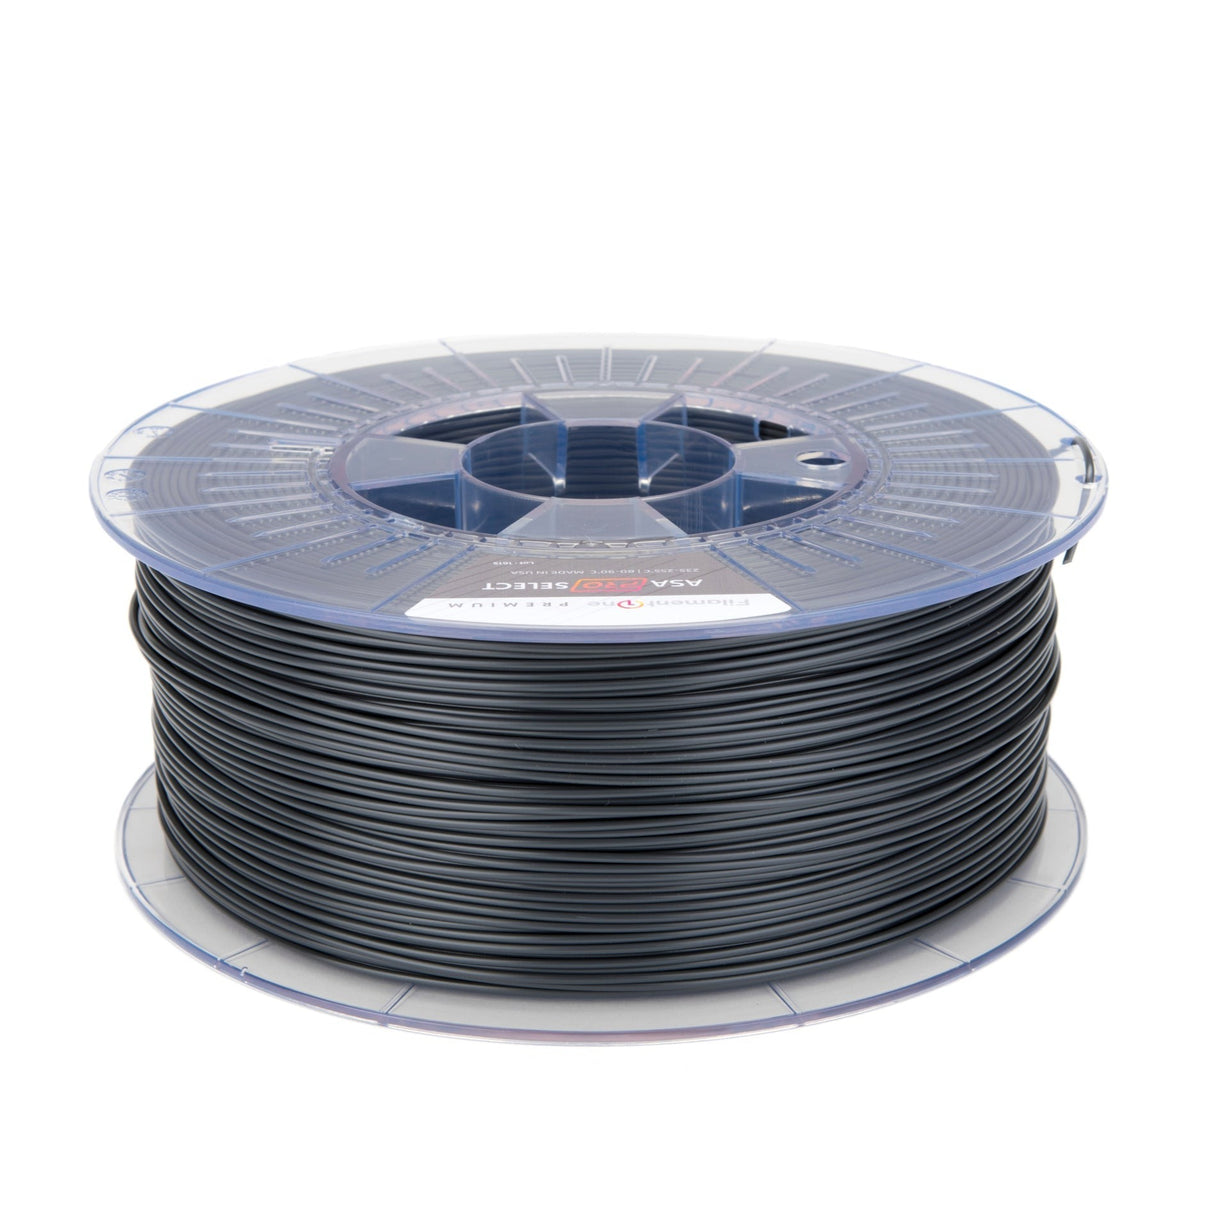 FilamentOne ASA PRO SELECT Iron Gray - 1.75mm (850G) 3D Printer Filament